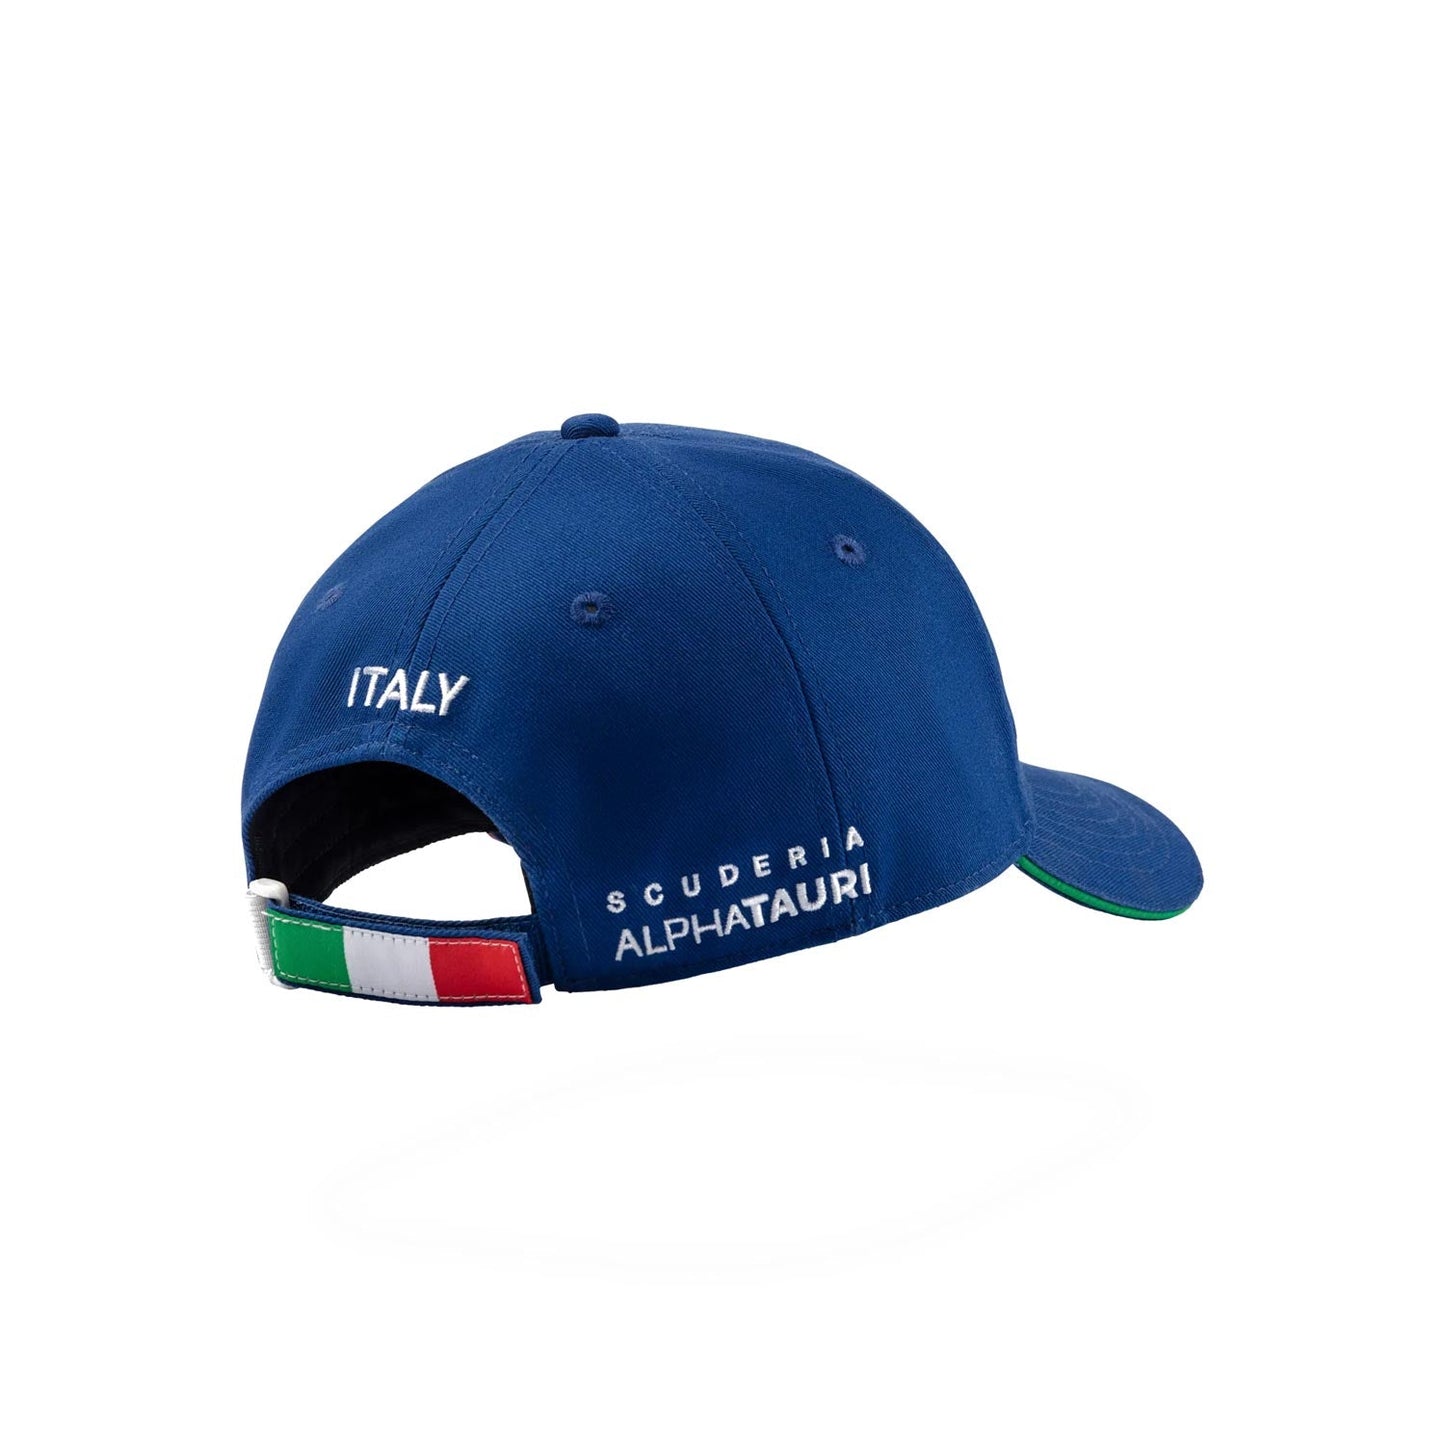 2023 Scuderia Alpha Tauri F1 ITALY GP mens baseball cap